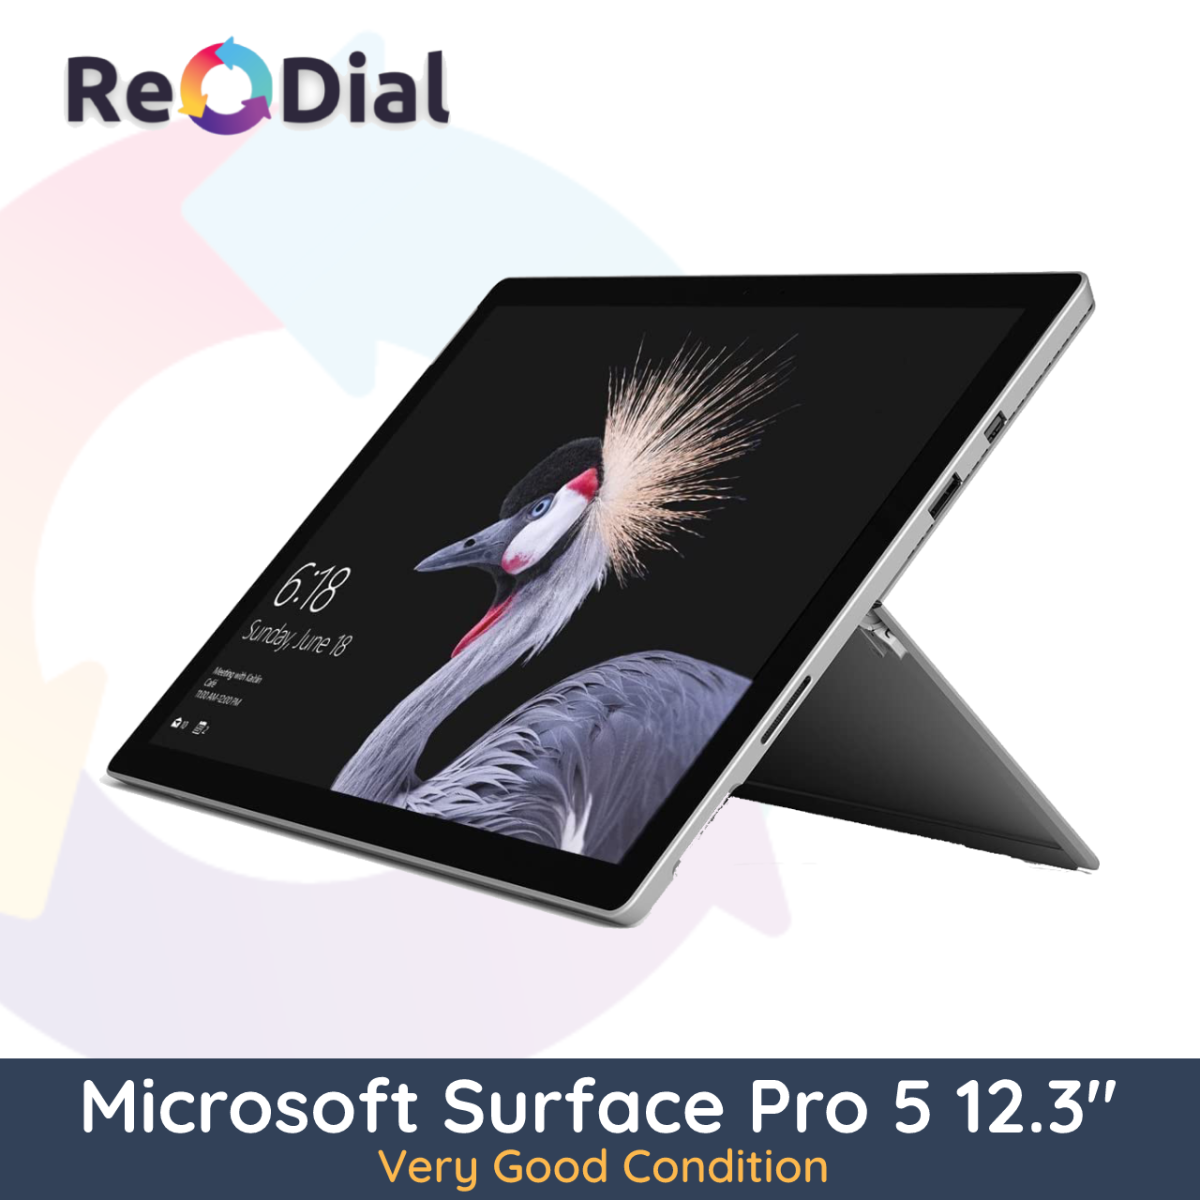 Microsoft Surface Pro 5 12.3" i7-7660U 512GB 16GB RAM - Very Good Condition